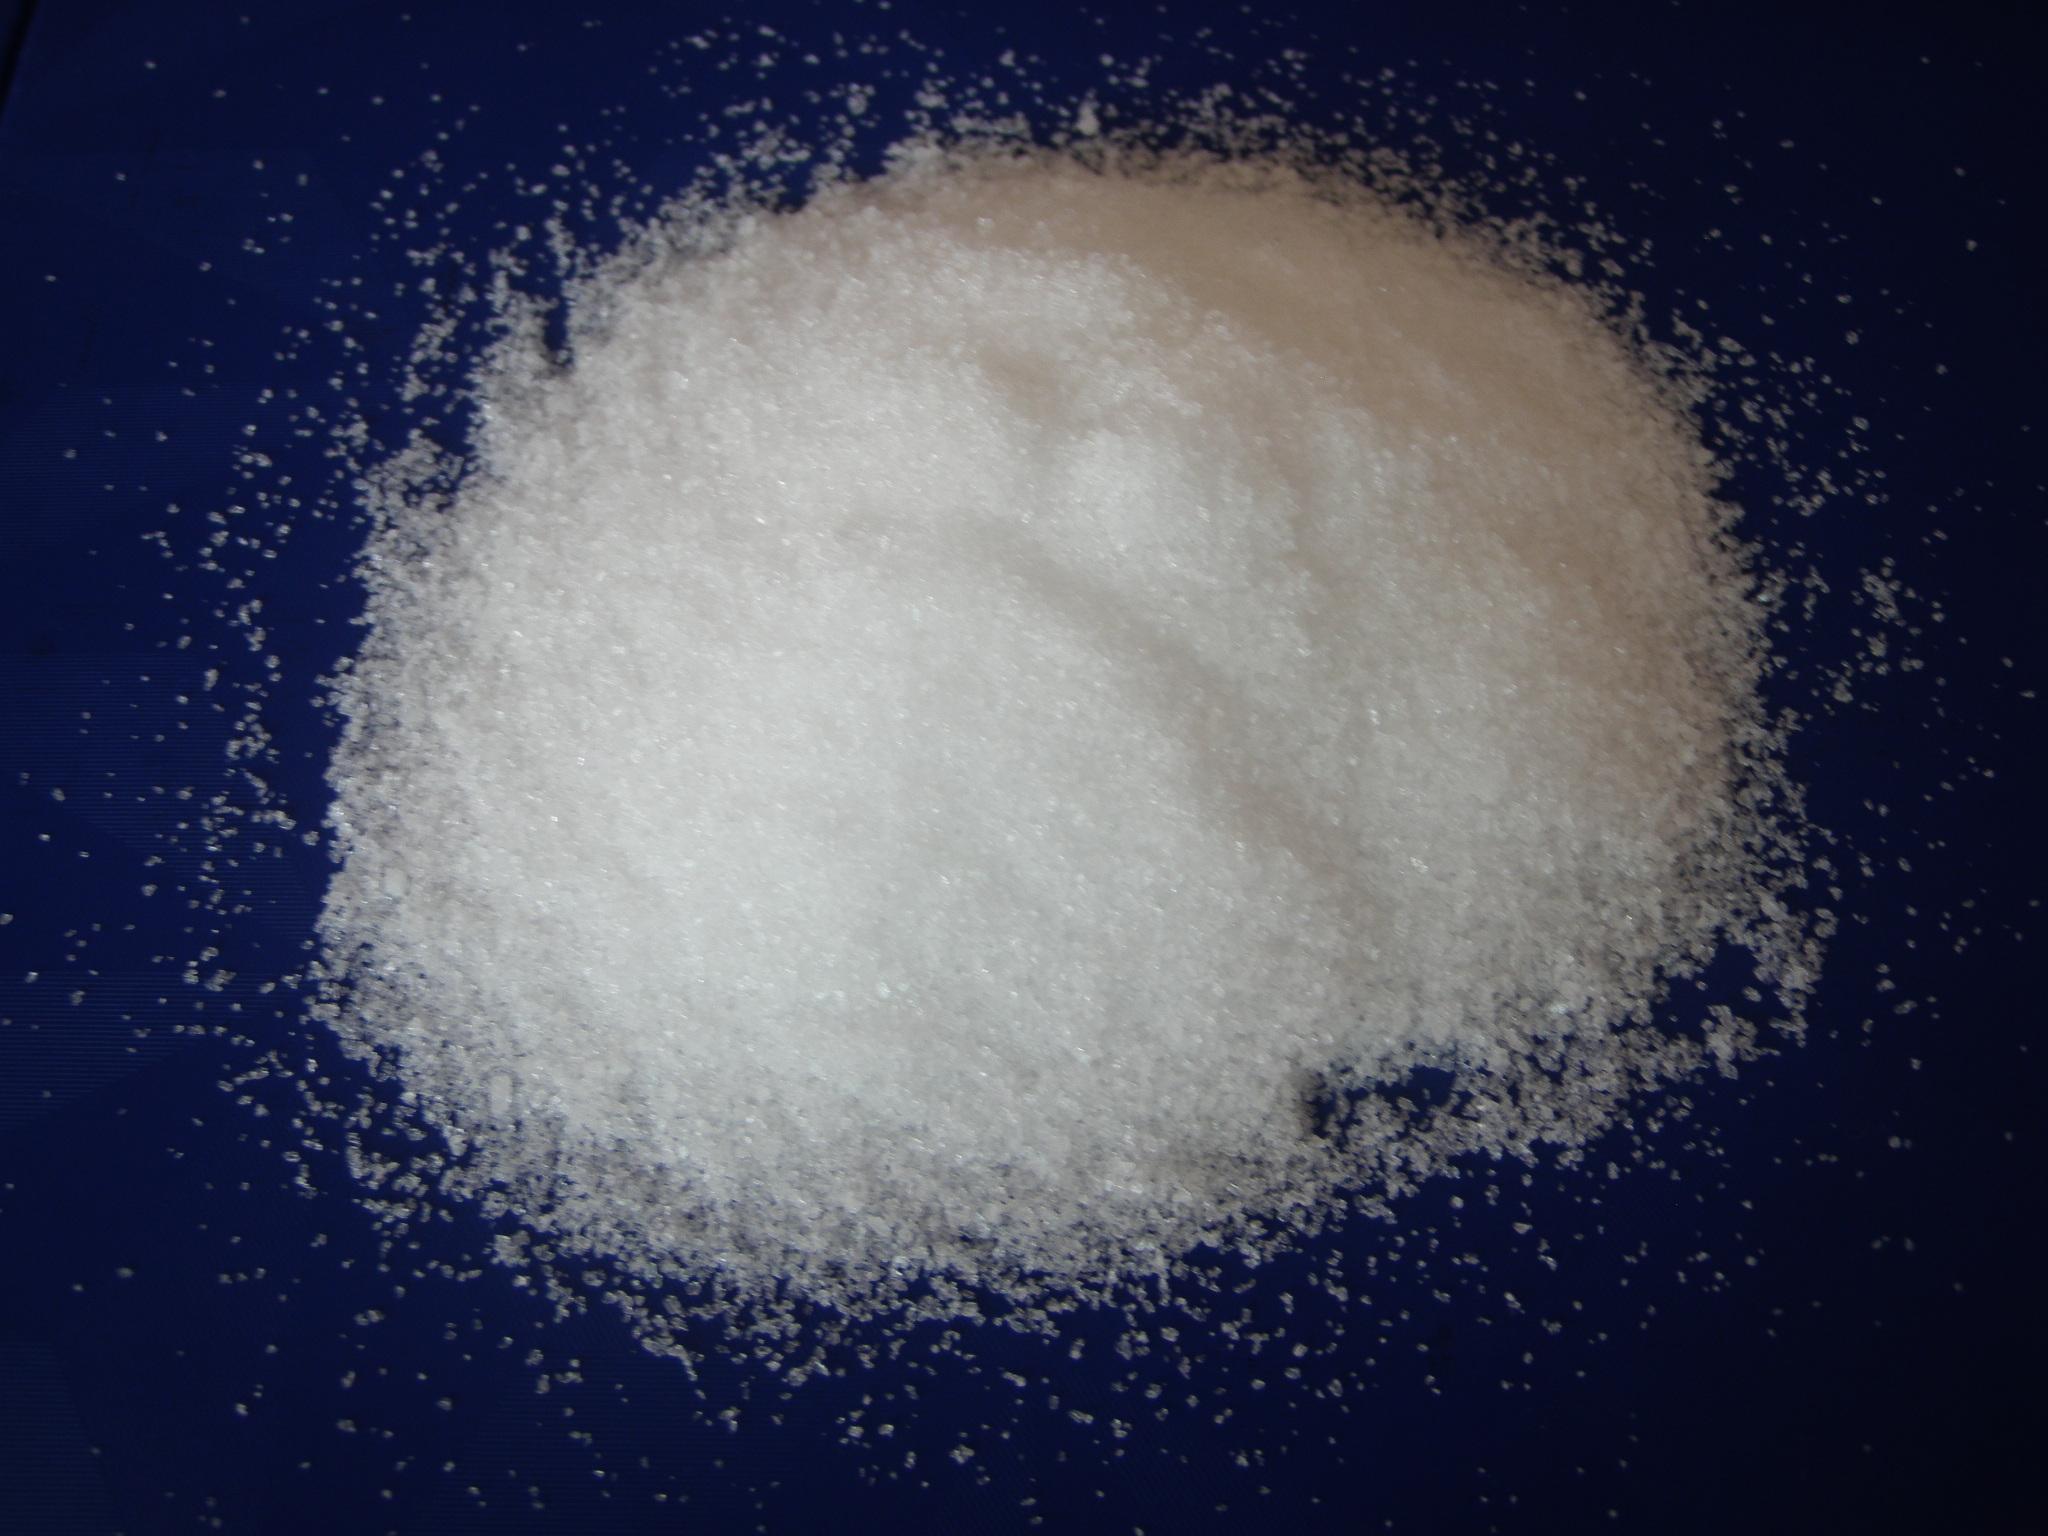 L-鸟氨酸L-天门冬氨酸盐